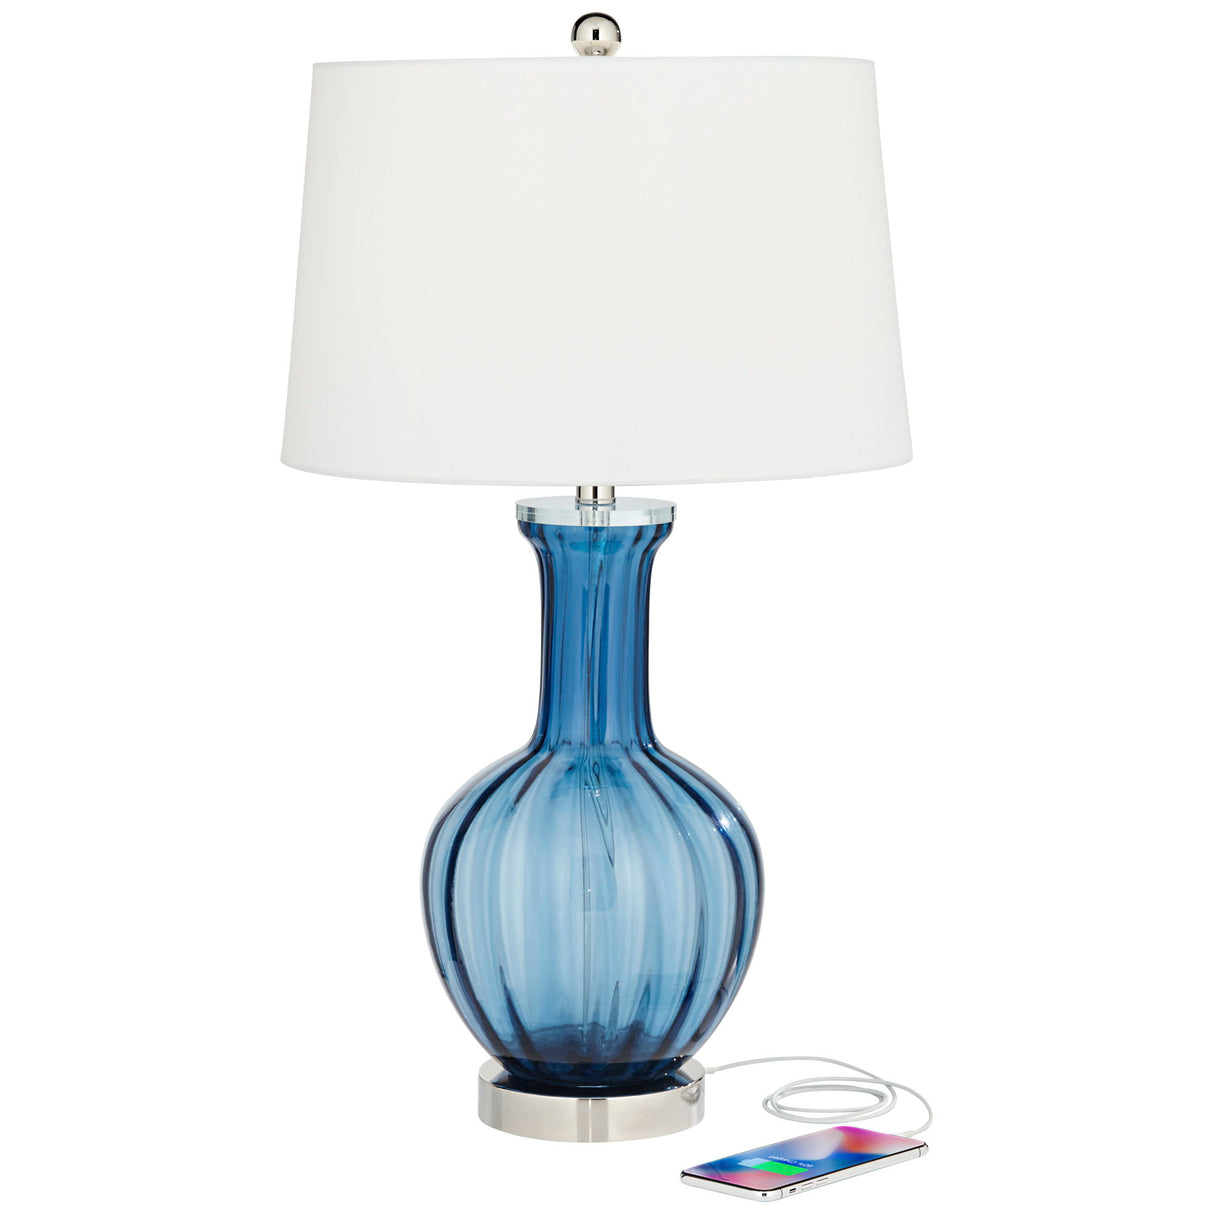 Adena - Table Lamps - Blue Sea